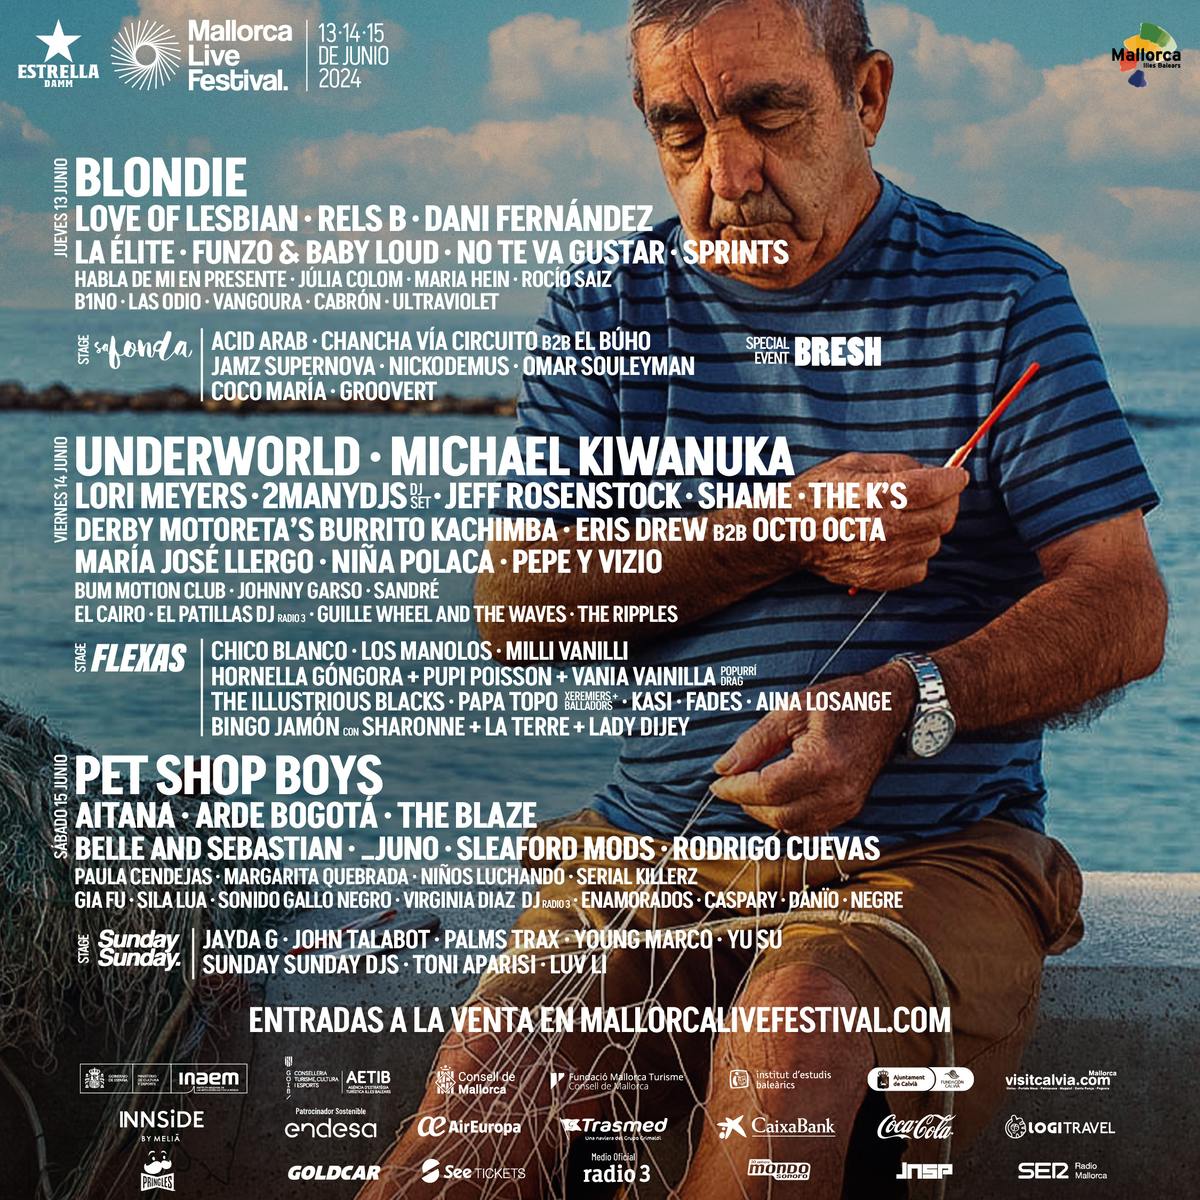 Weekender (Friday+Saturday) Ticket Mallorca Live Festival 2024 Musement